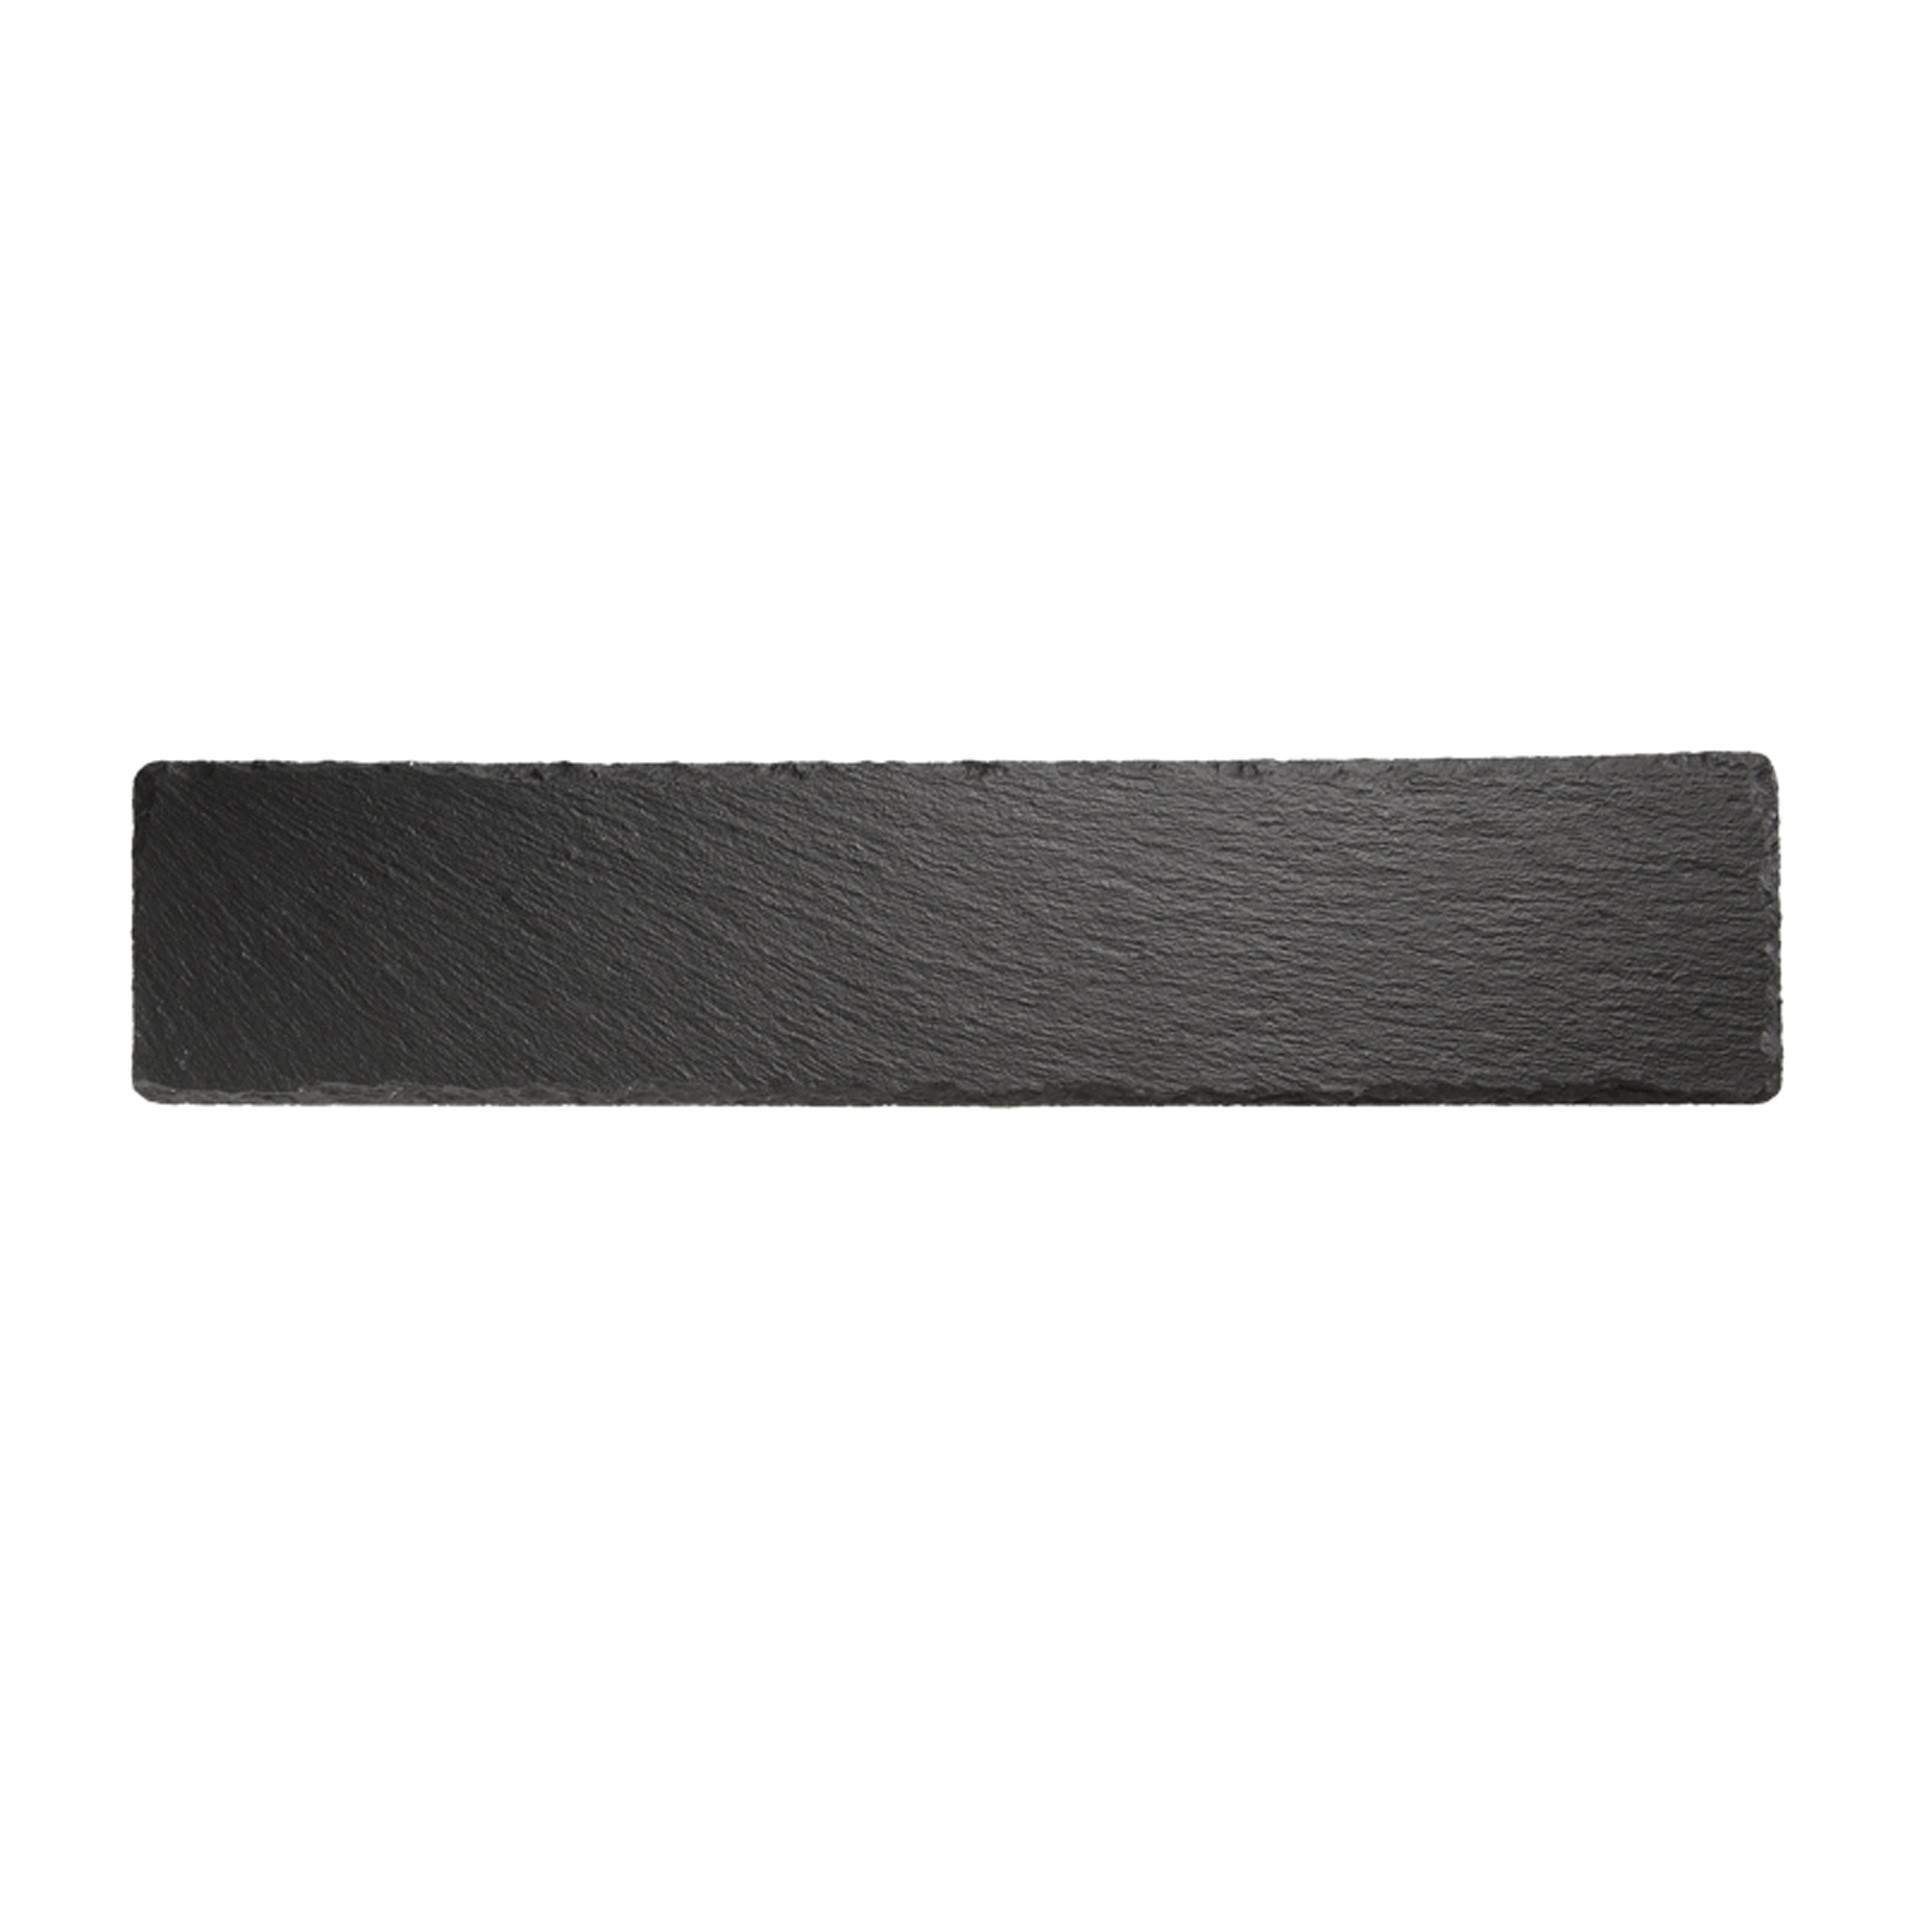 Naturschieferplatte - hervorragende Kältespeicherung - schwarz - lang - Abm. 47 x 10 cm - Naturschiefer - 945-B